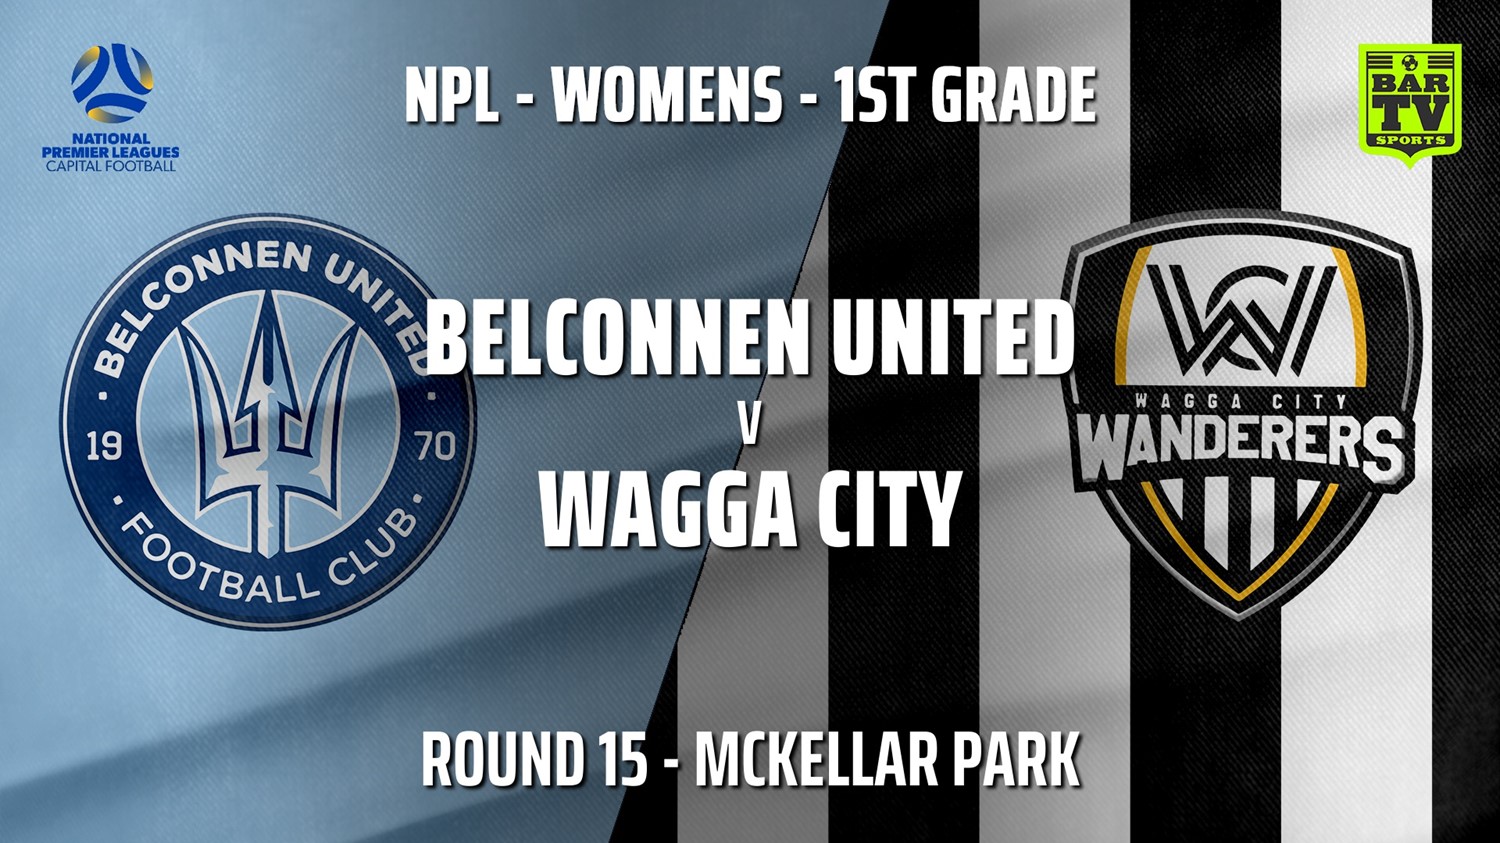 210724-Capital Womens Round 15 - Belconnen United (women) v Wagga City Wanderers FC (women) Minigame Slate Image